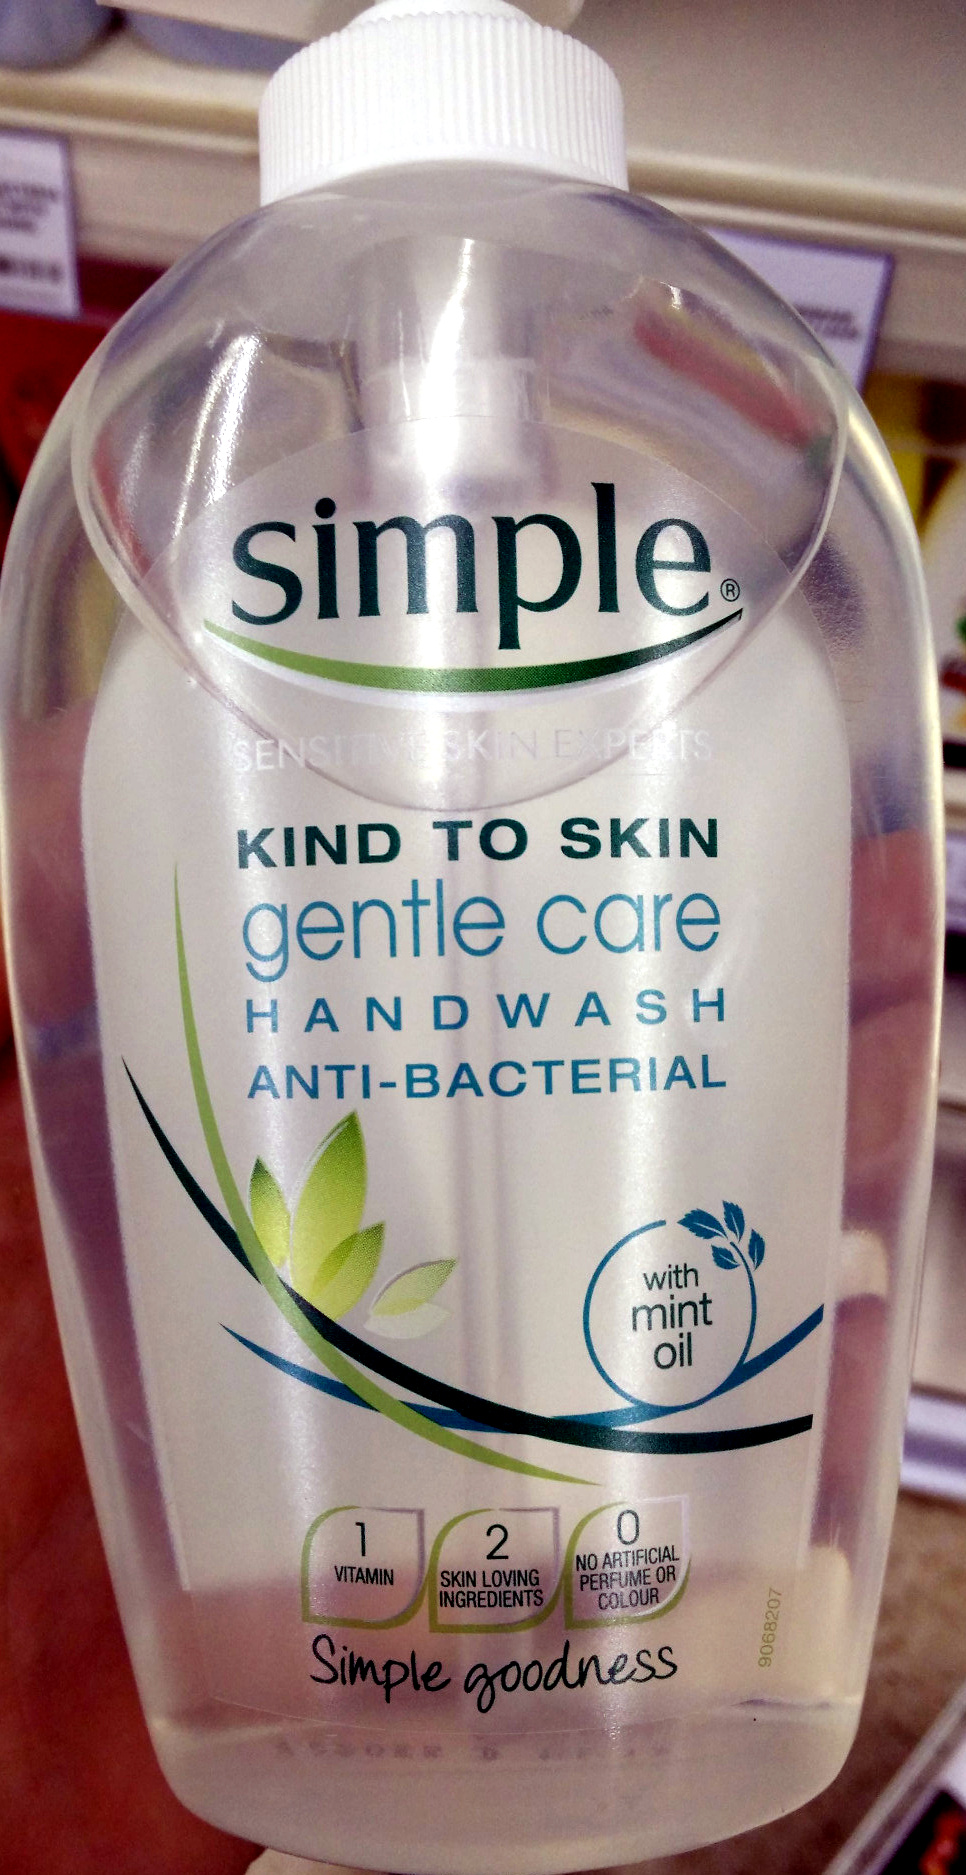 Kind ton skin gentle care handwash anti-bacterial with mint oil - Produit - en